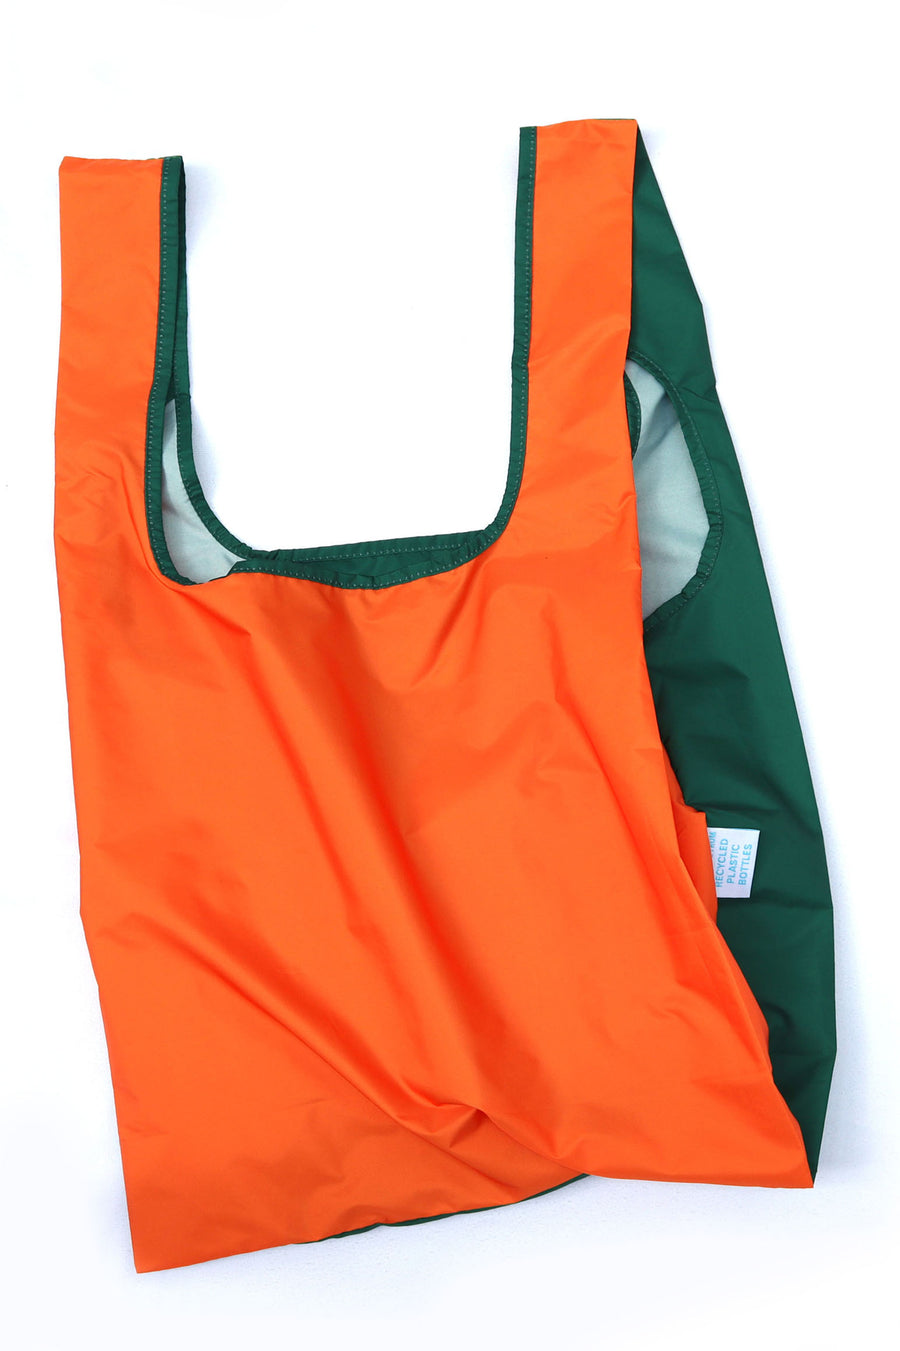 Kind Bag Bi-Colour Orange and Green Reusable Bag Flatlay